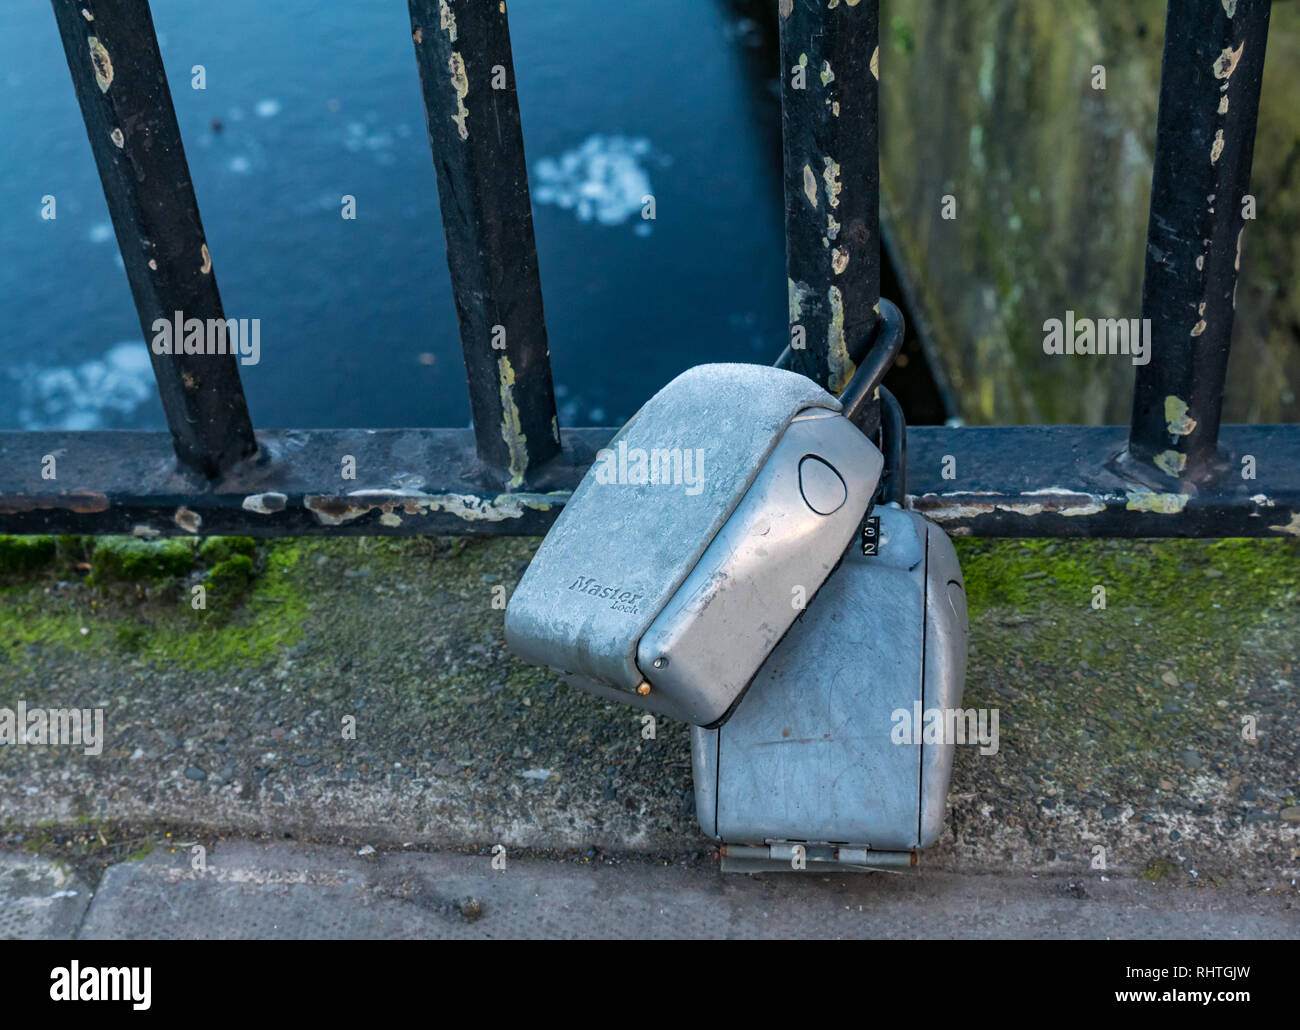 Airbnb, short term rental, keysafes locked on bridge railing, The Shore, Leith, Edinburgh, Scotland, UK Stock Photo